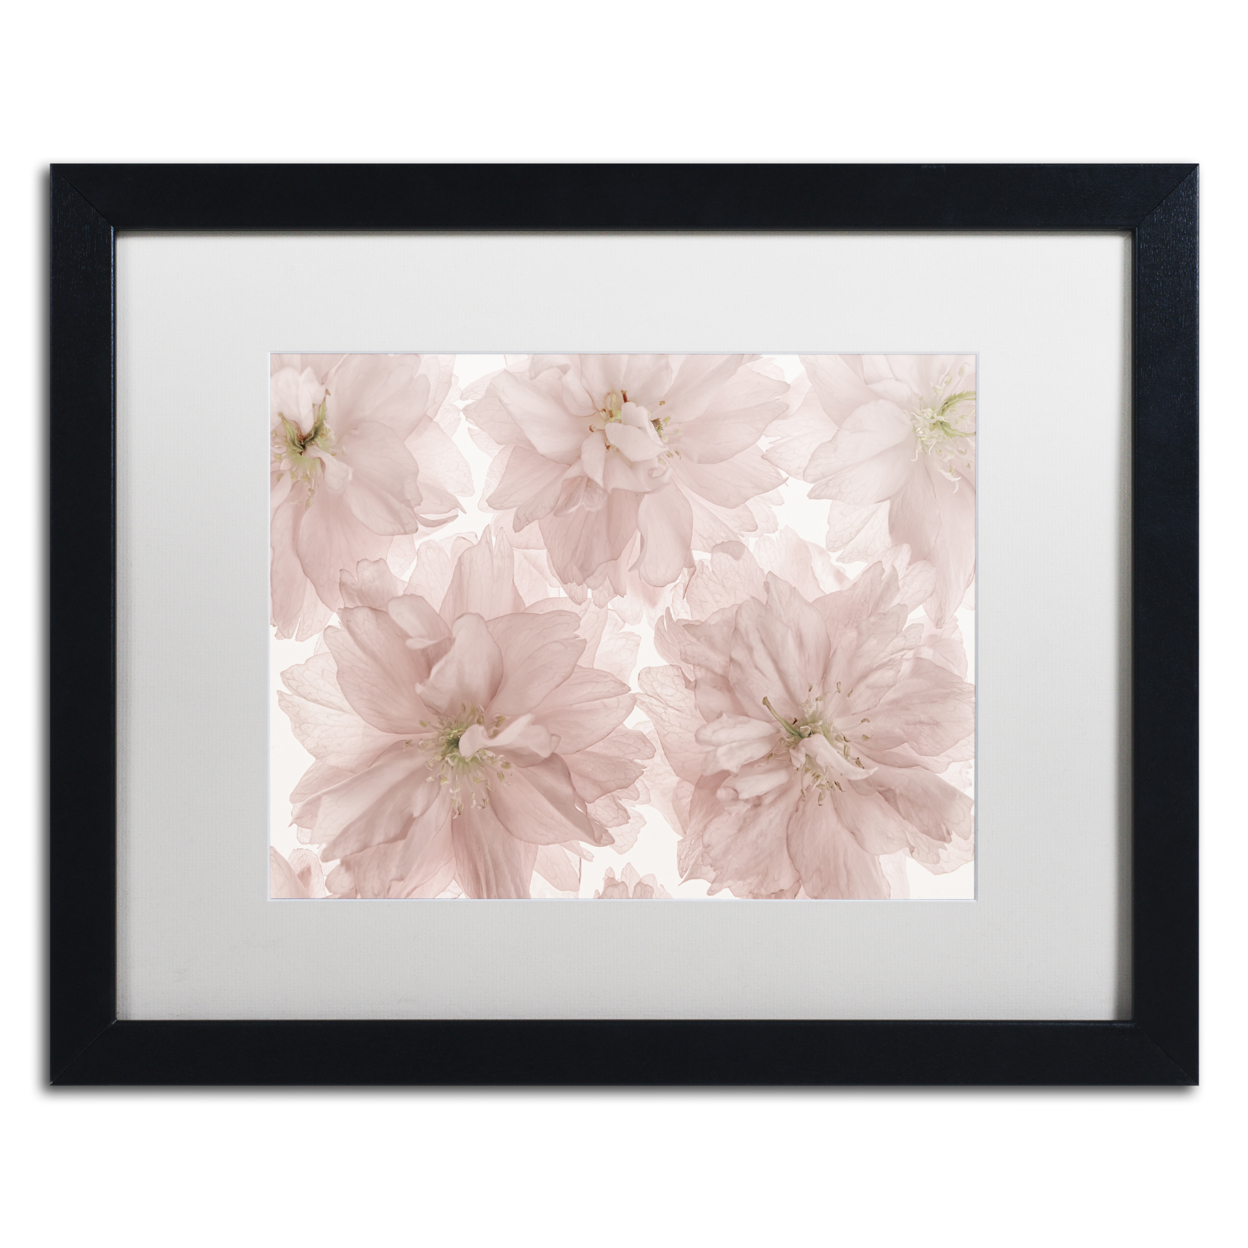 Cora Niele 'Prunus Blossom' Black Wooden Framed Art 18 X 22 Inches